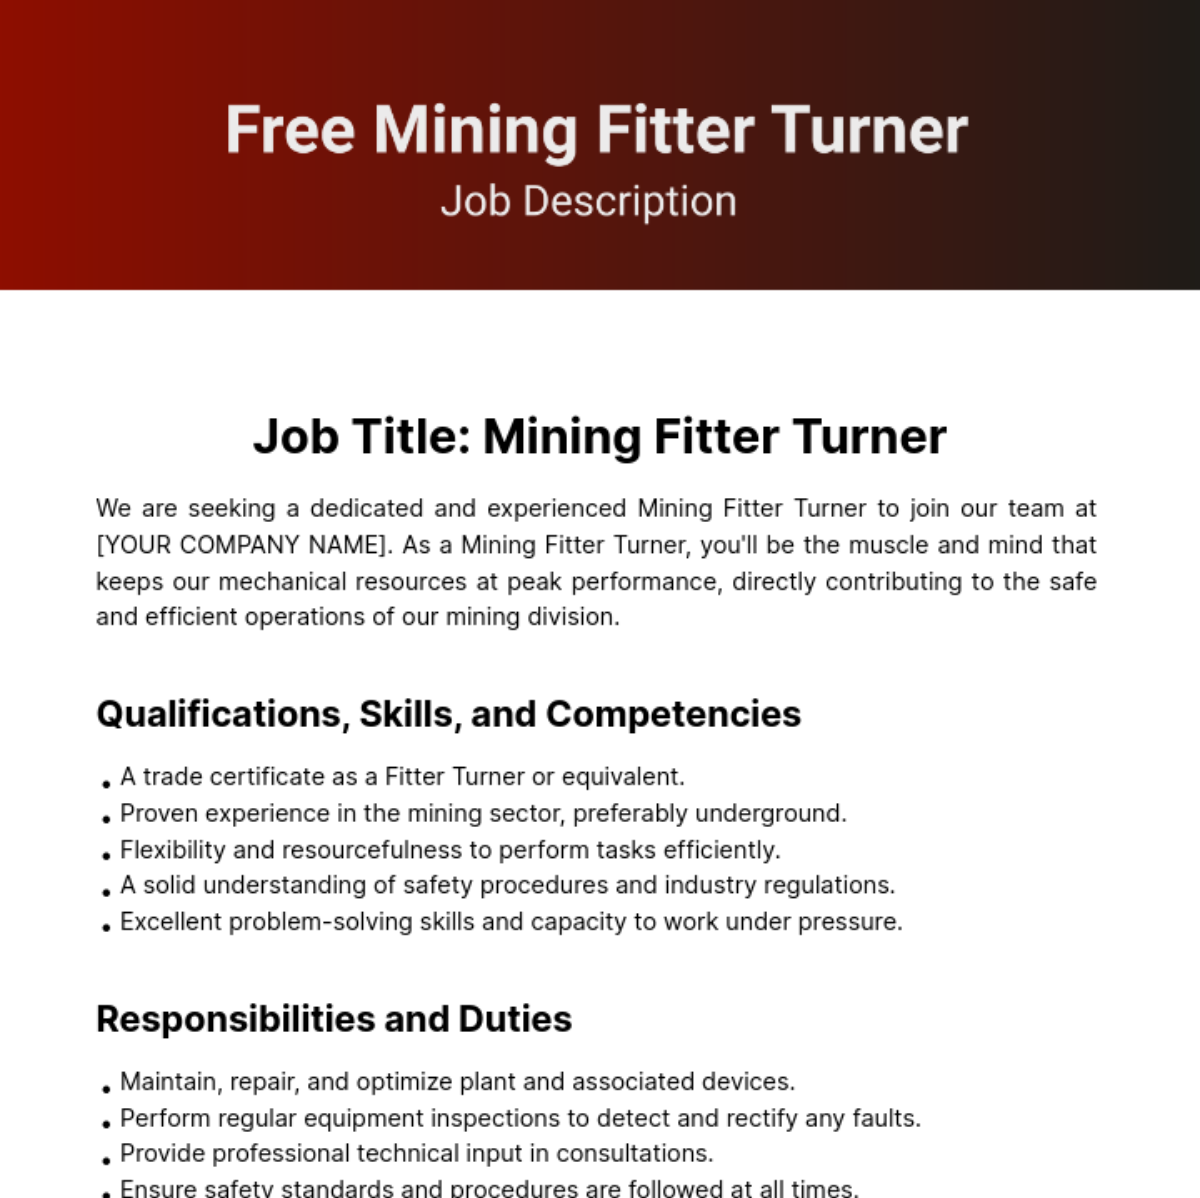 Mining Fitter Turner Job Description Template